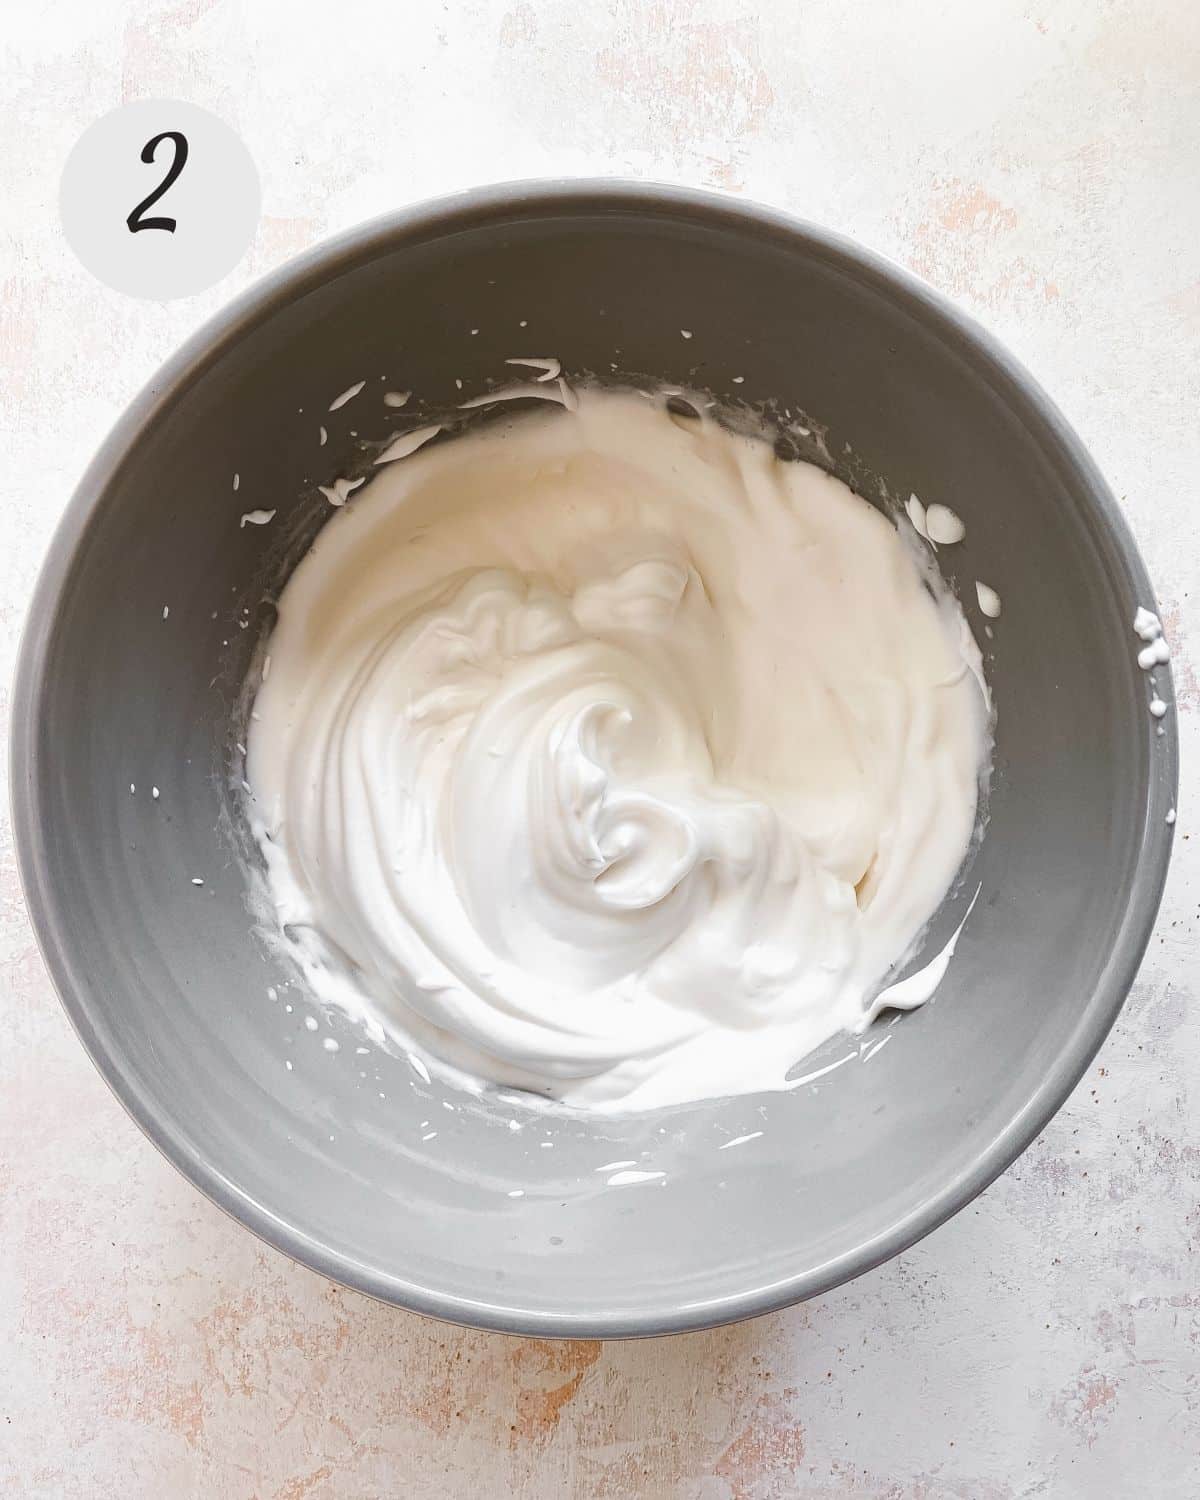 instructions on how to make vegan meringue.